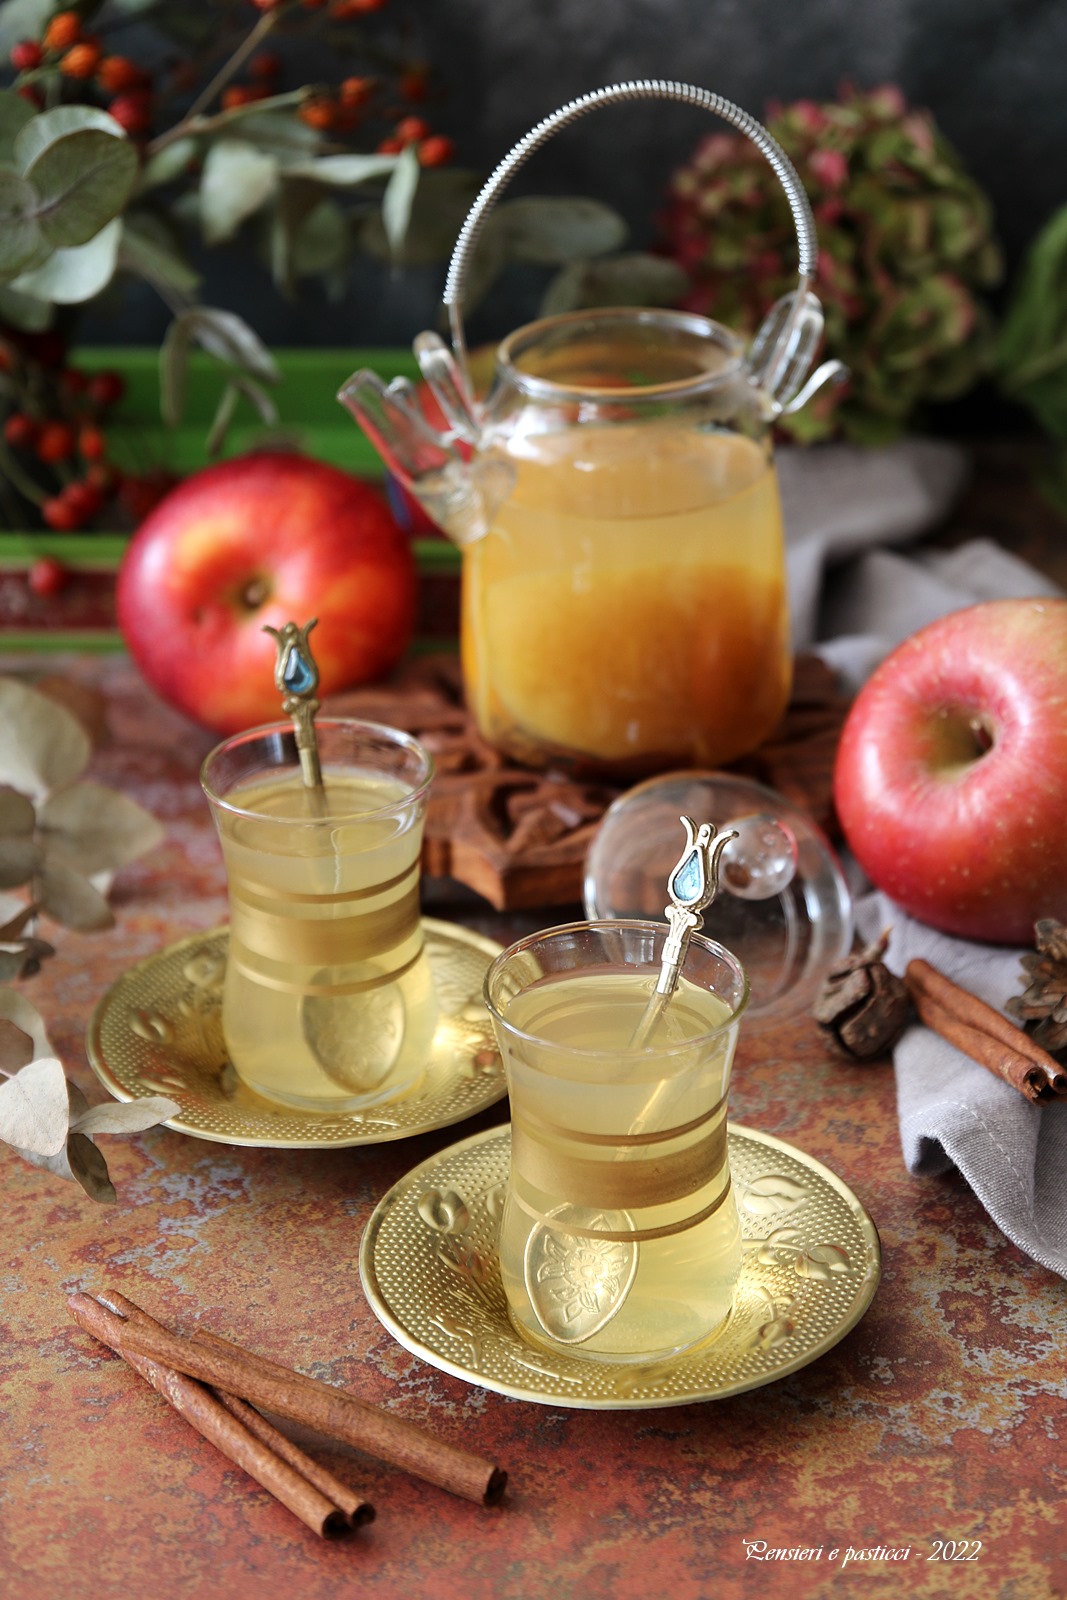 Elma cayi tè alla mela turco - Pensieri e pasticci